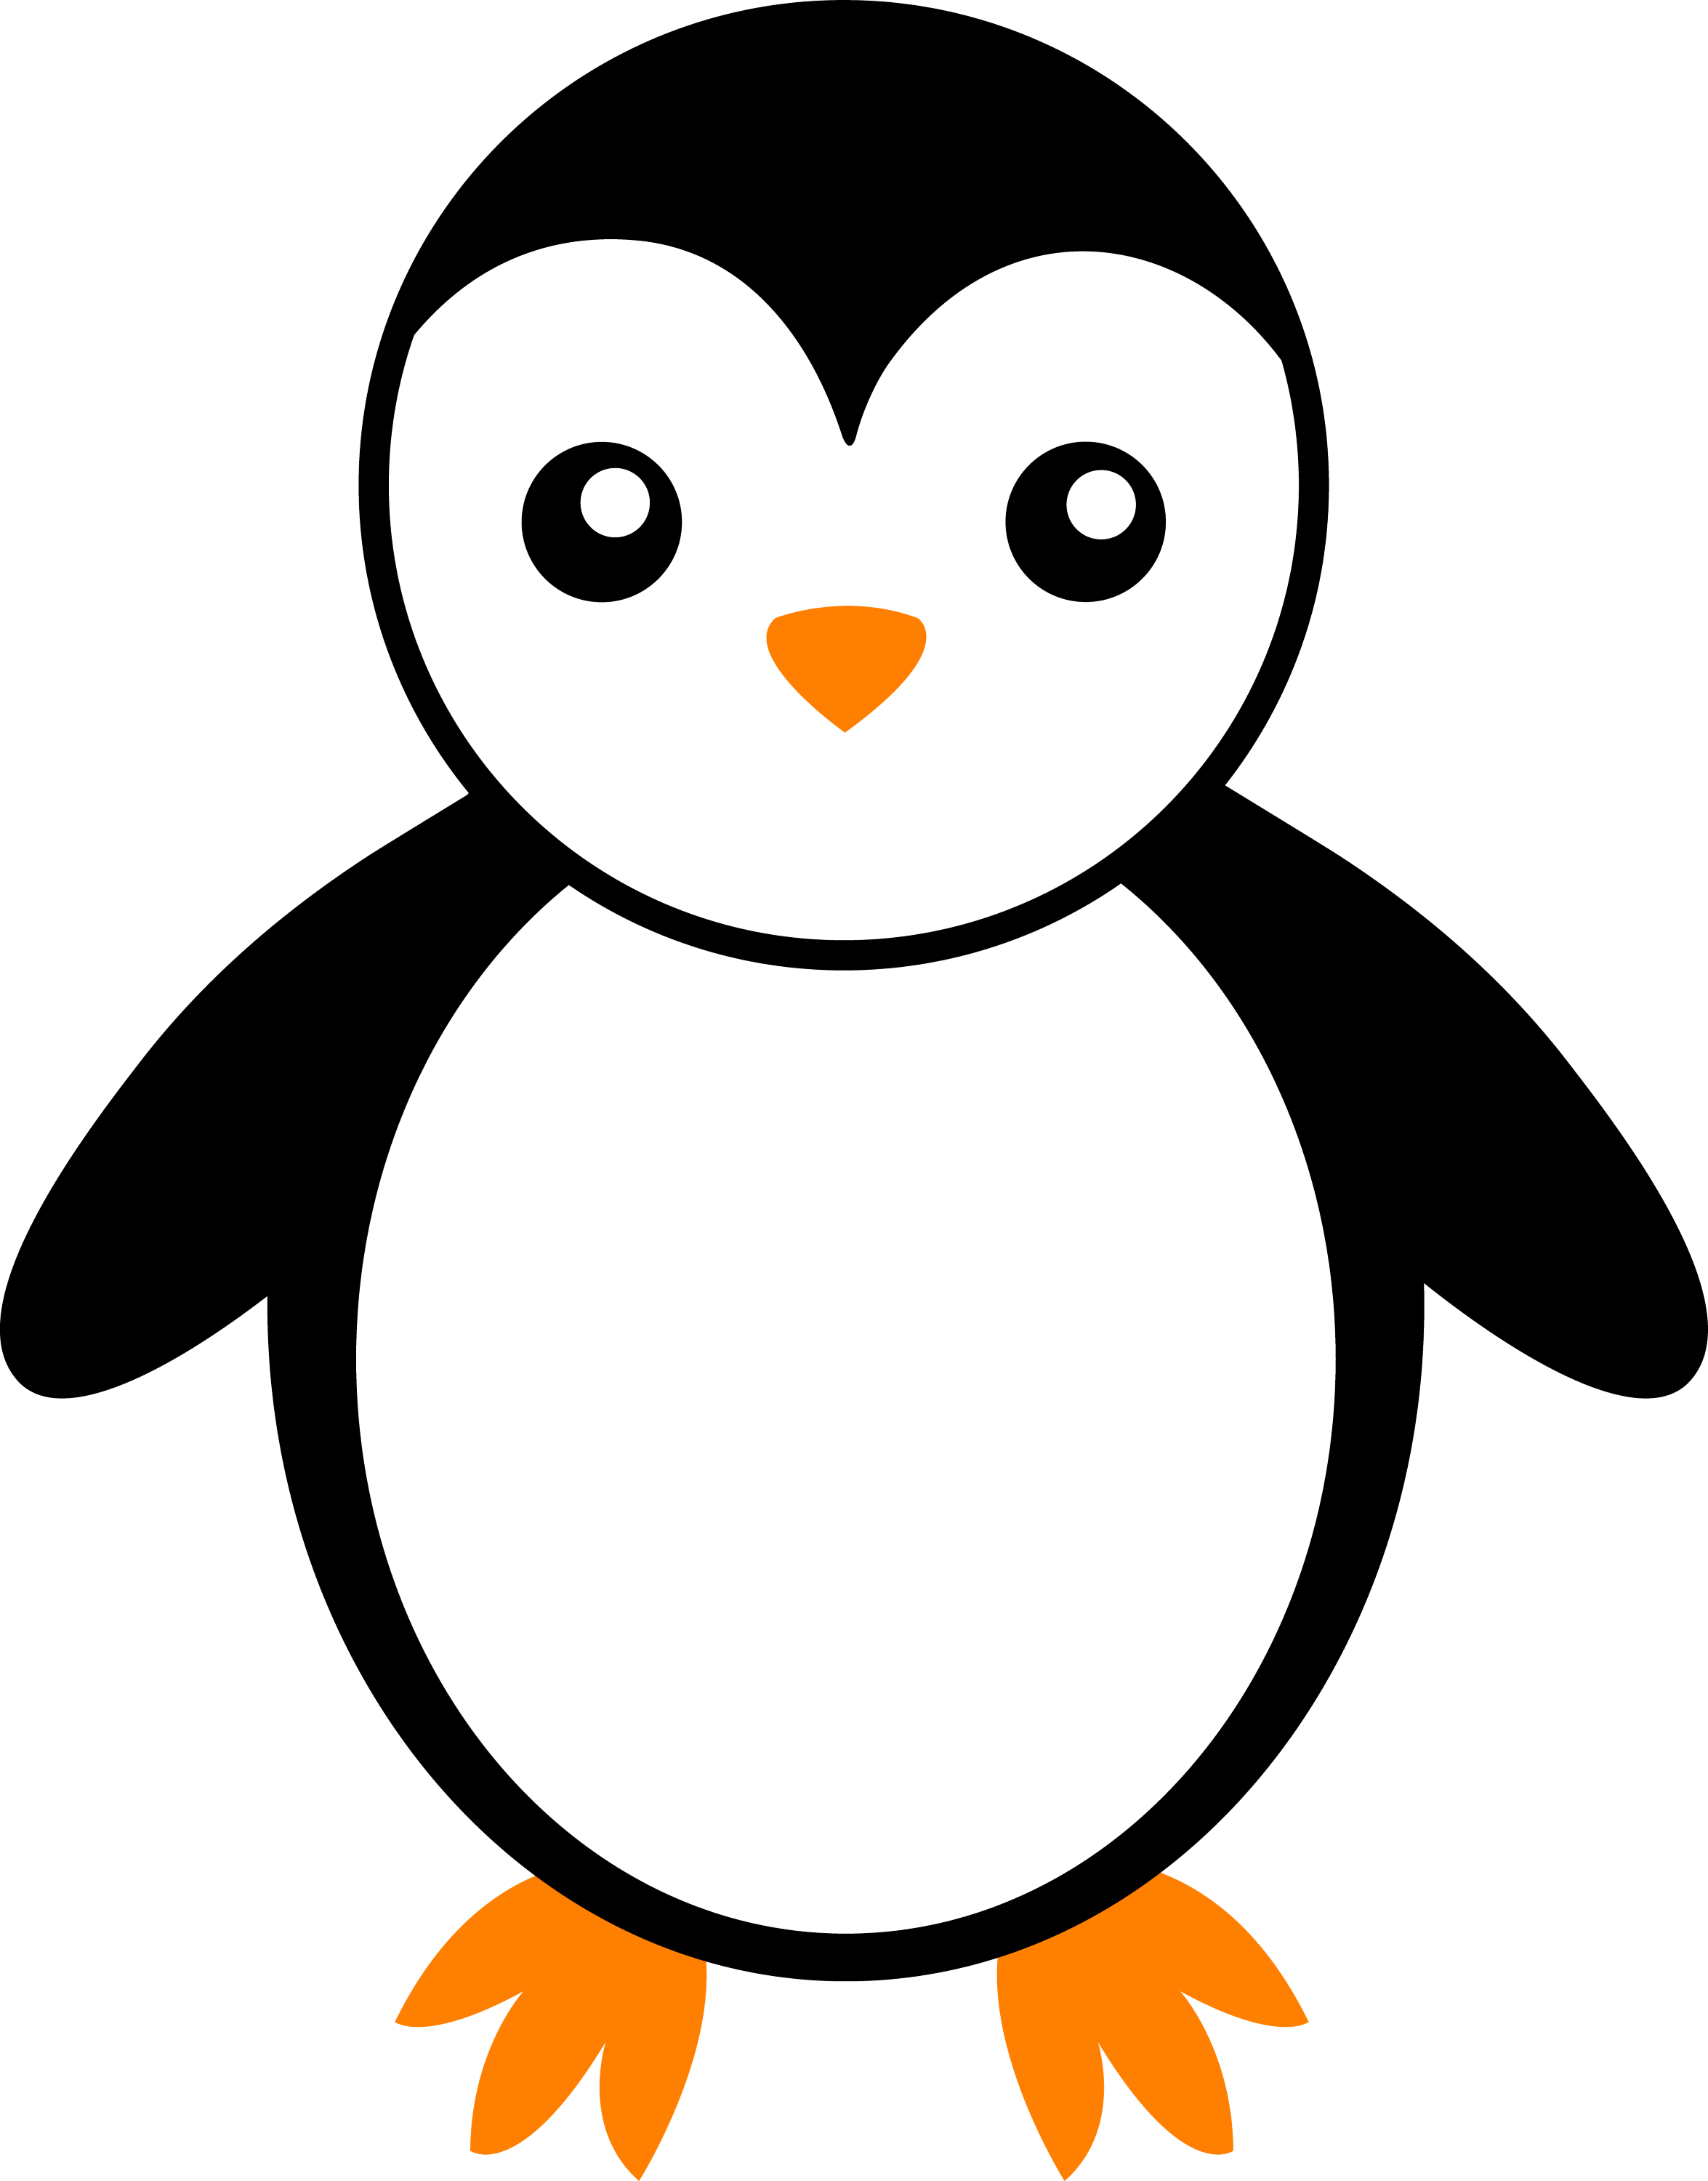 Black and White Penguin Free Clip Art